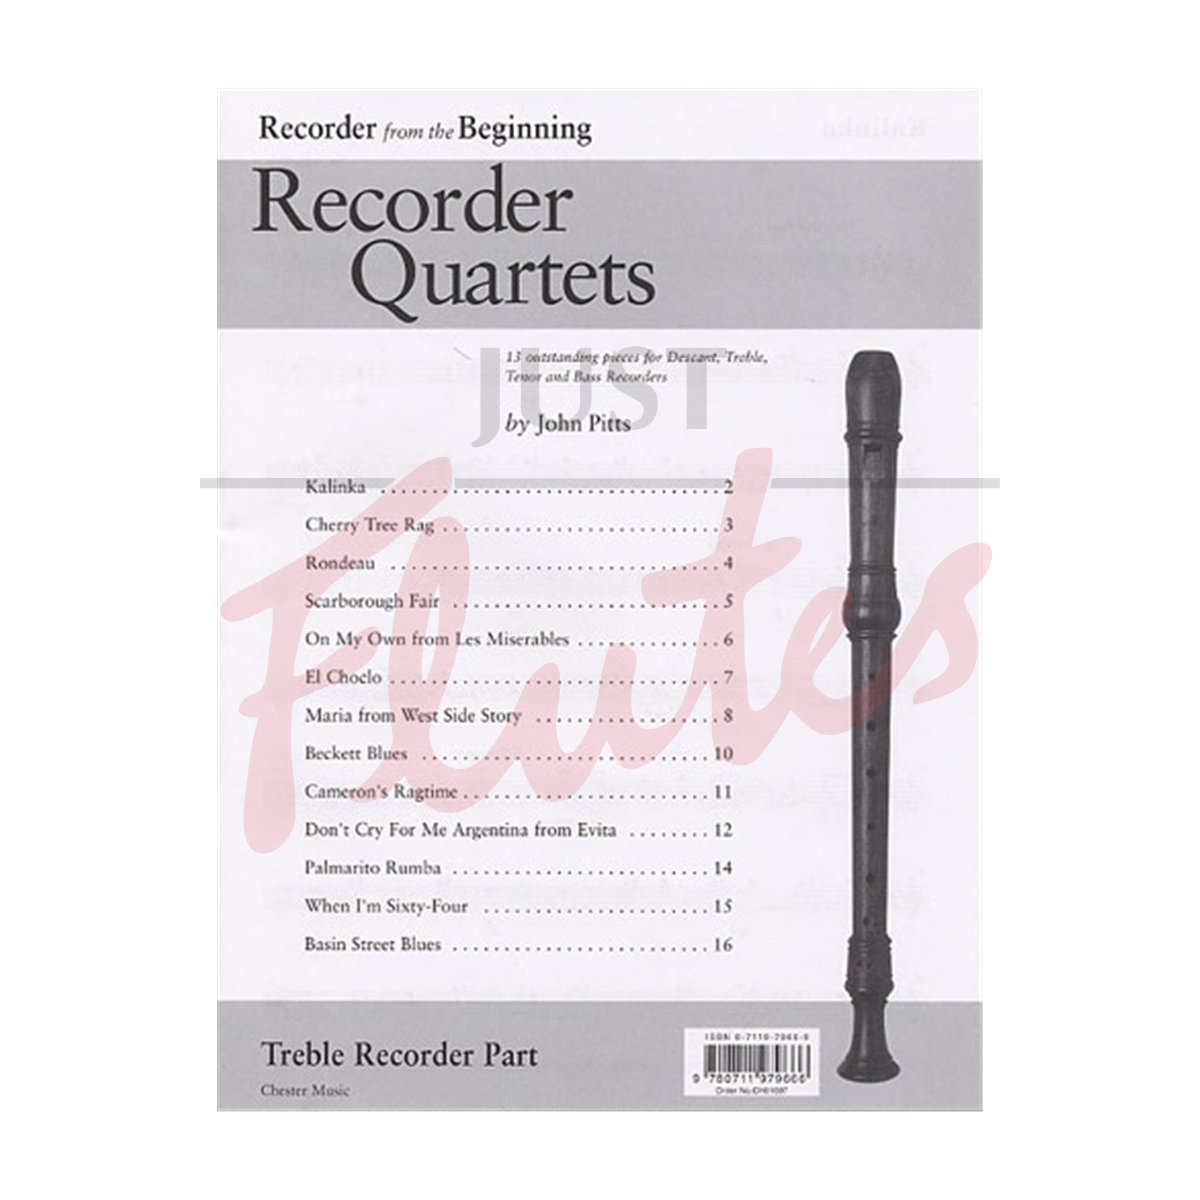 Recorder from the Beginning: Recorder Quartets, Treble Recorder Part